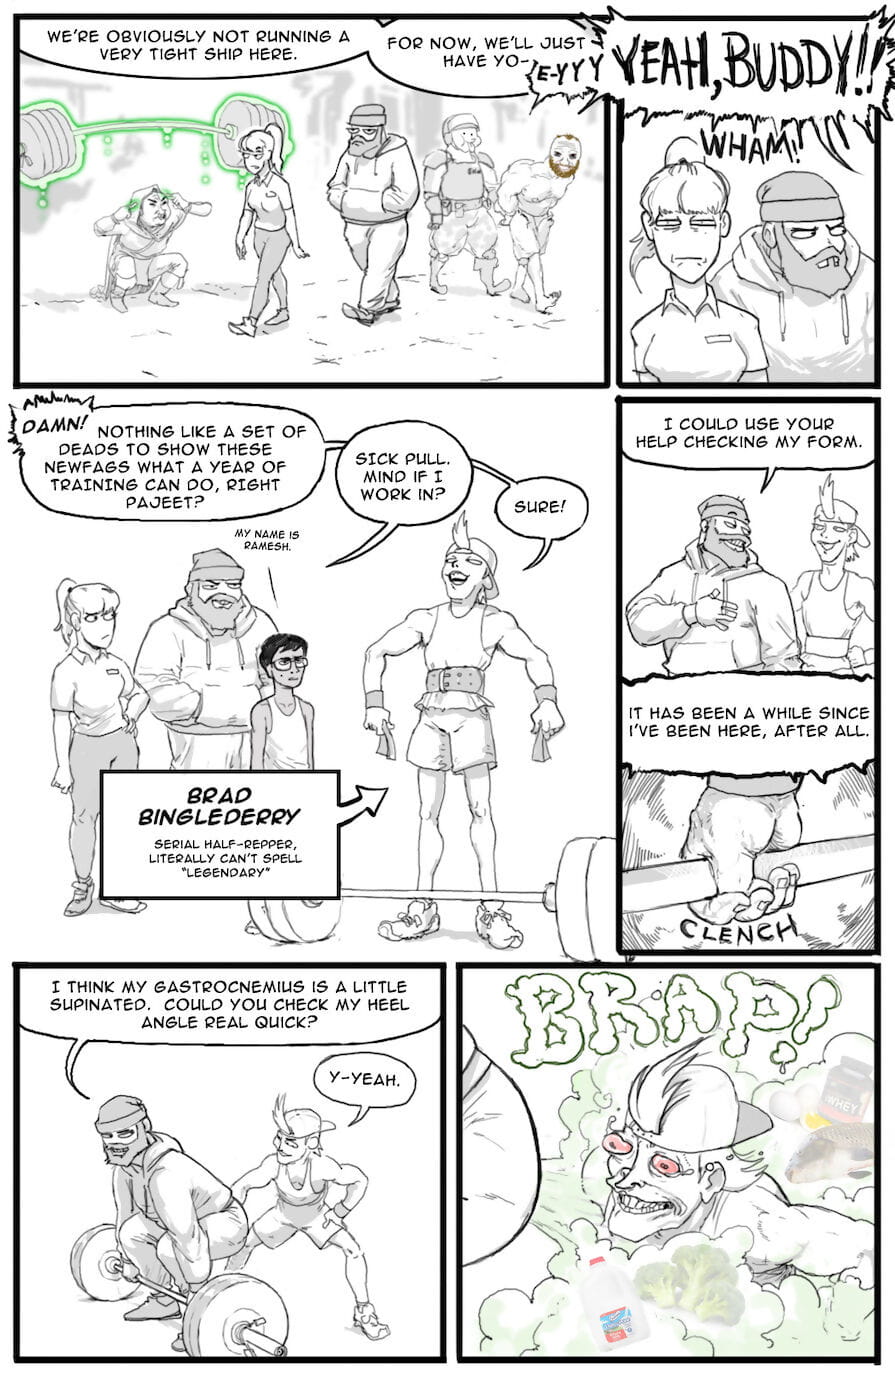 /fit/ comics Teil 3 page 1